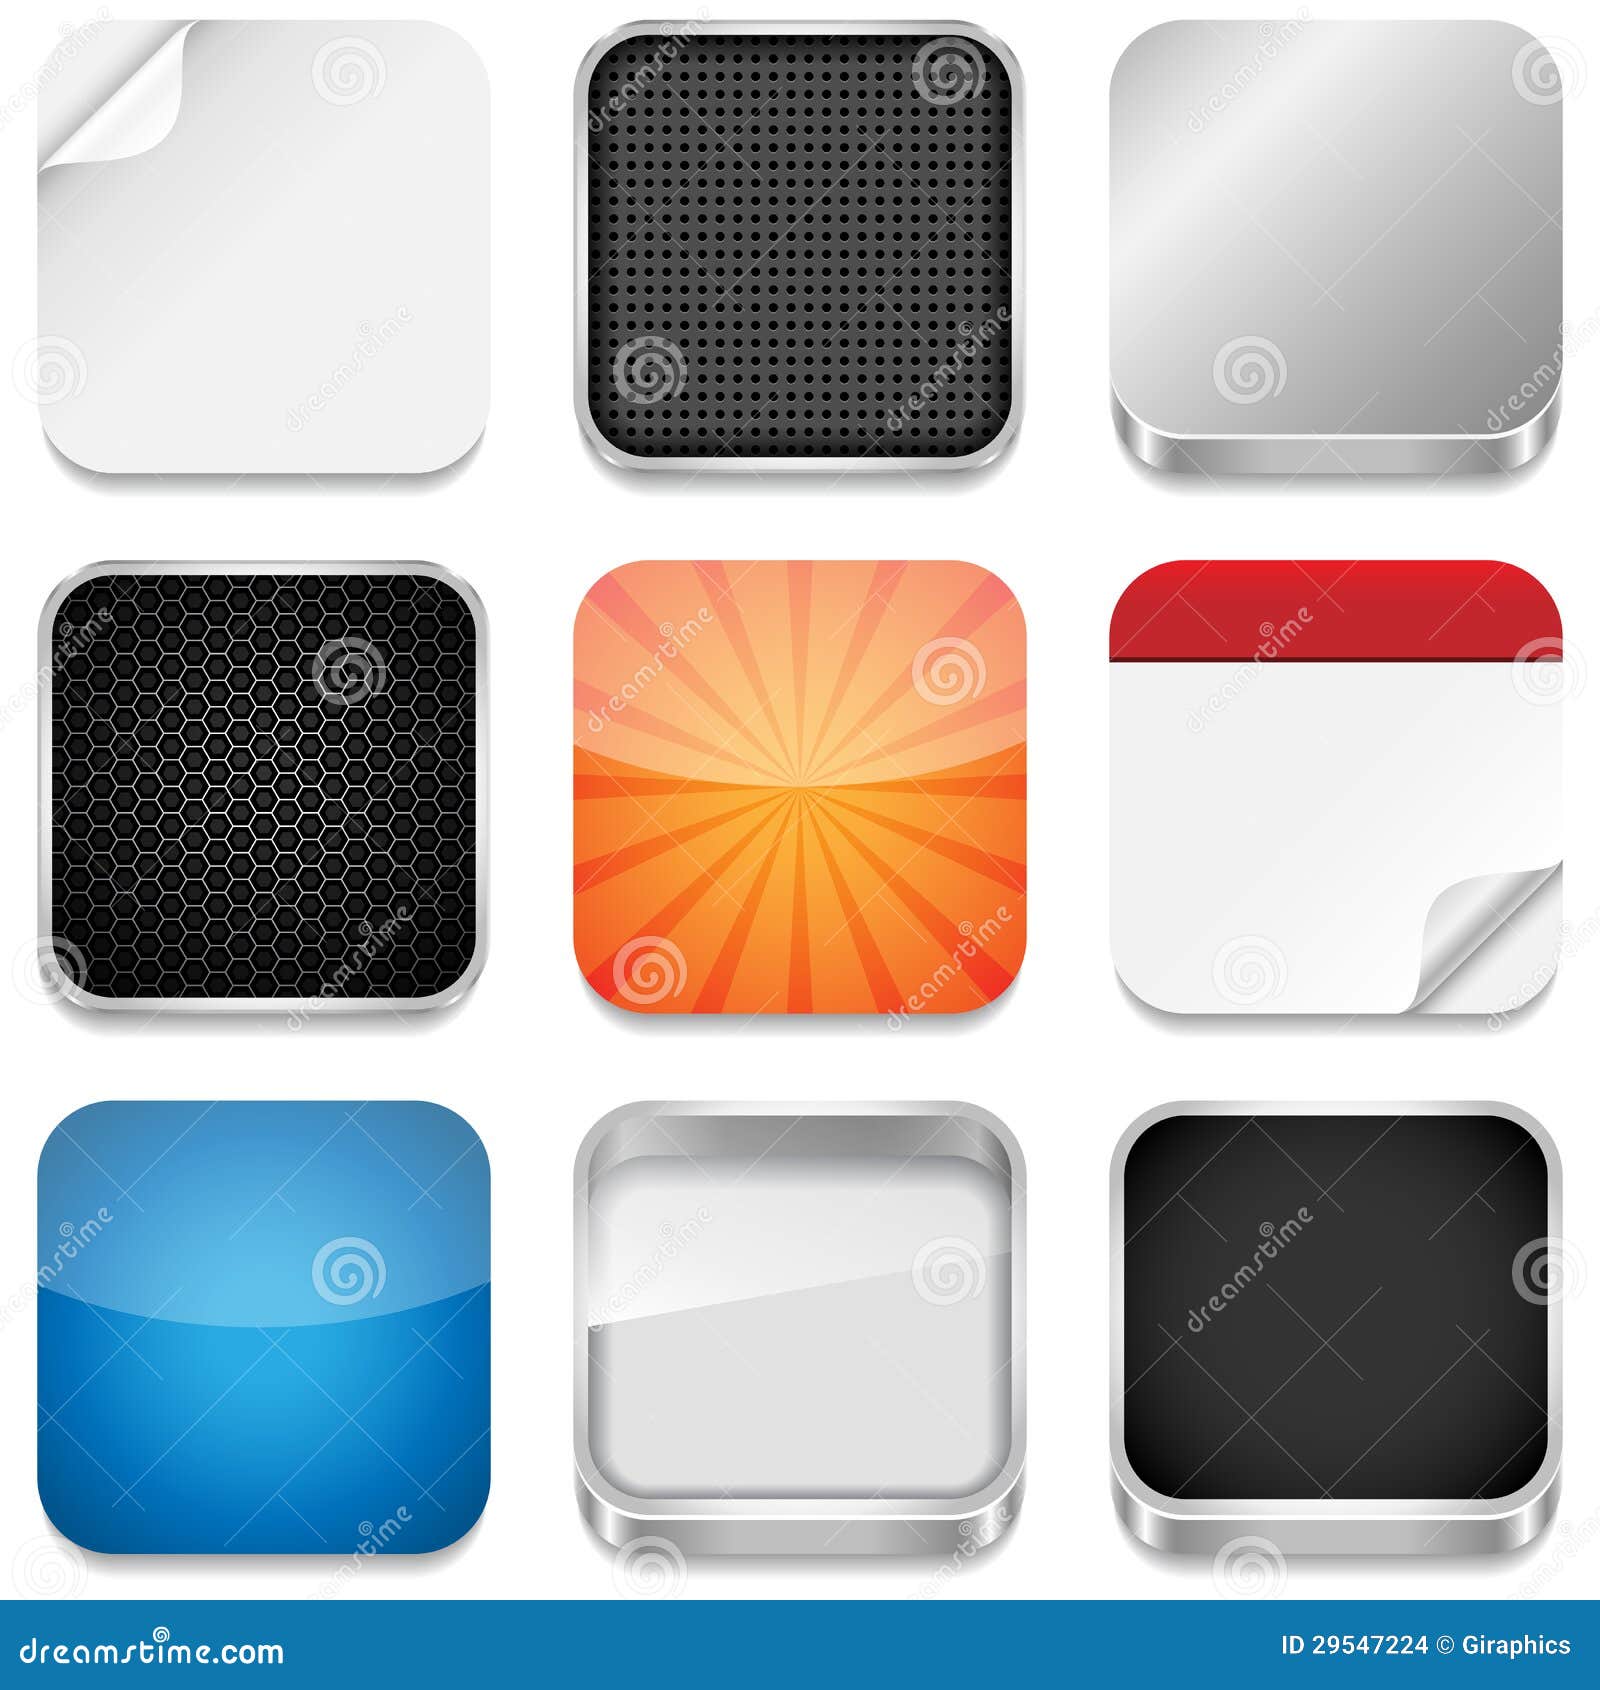 app icon templates